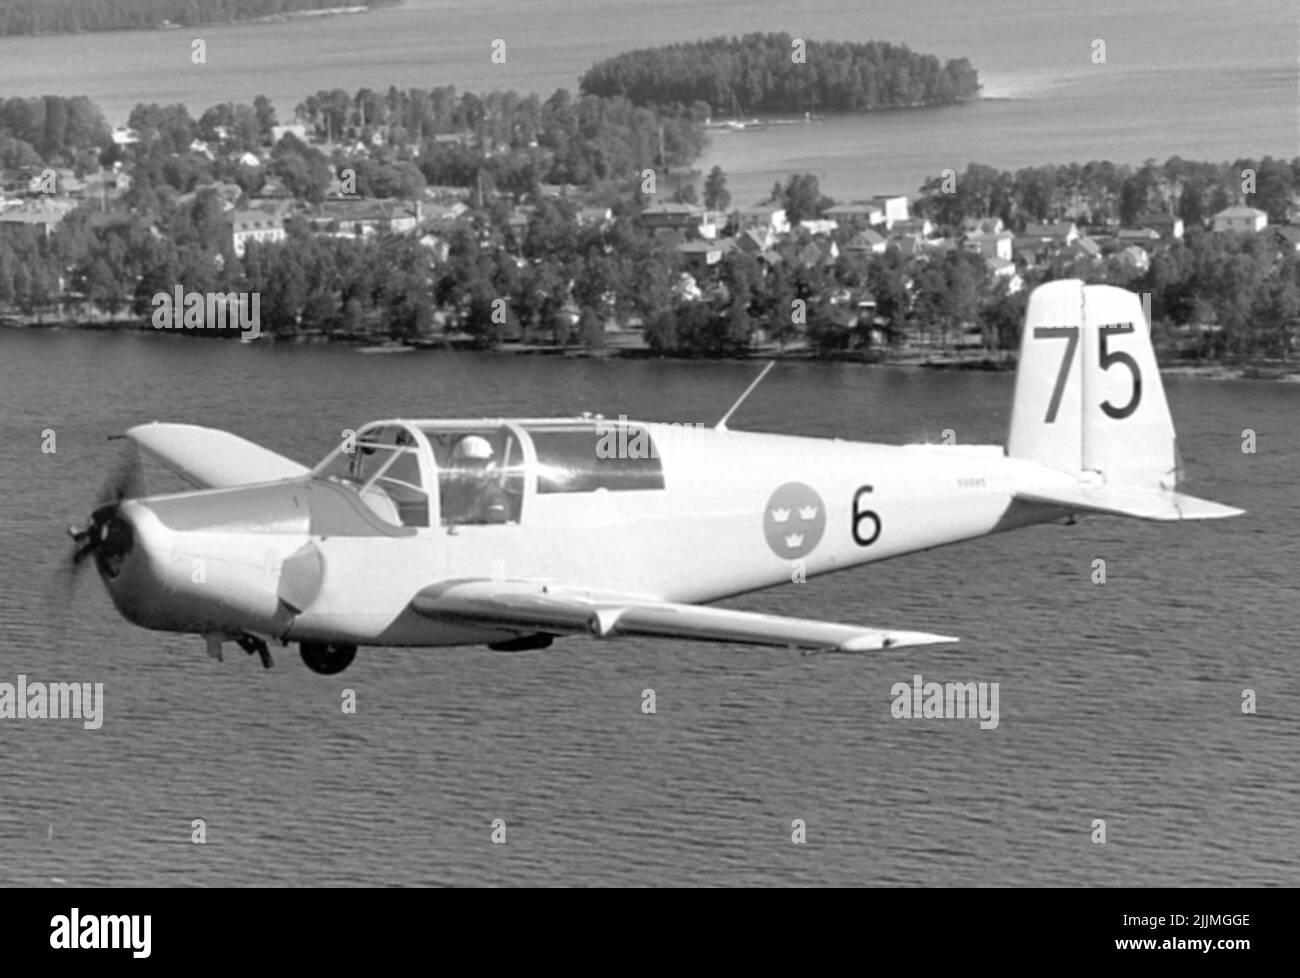 F6 Karlsborg. Aircraft SK 50 C over Lake Botten. Stock Photo